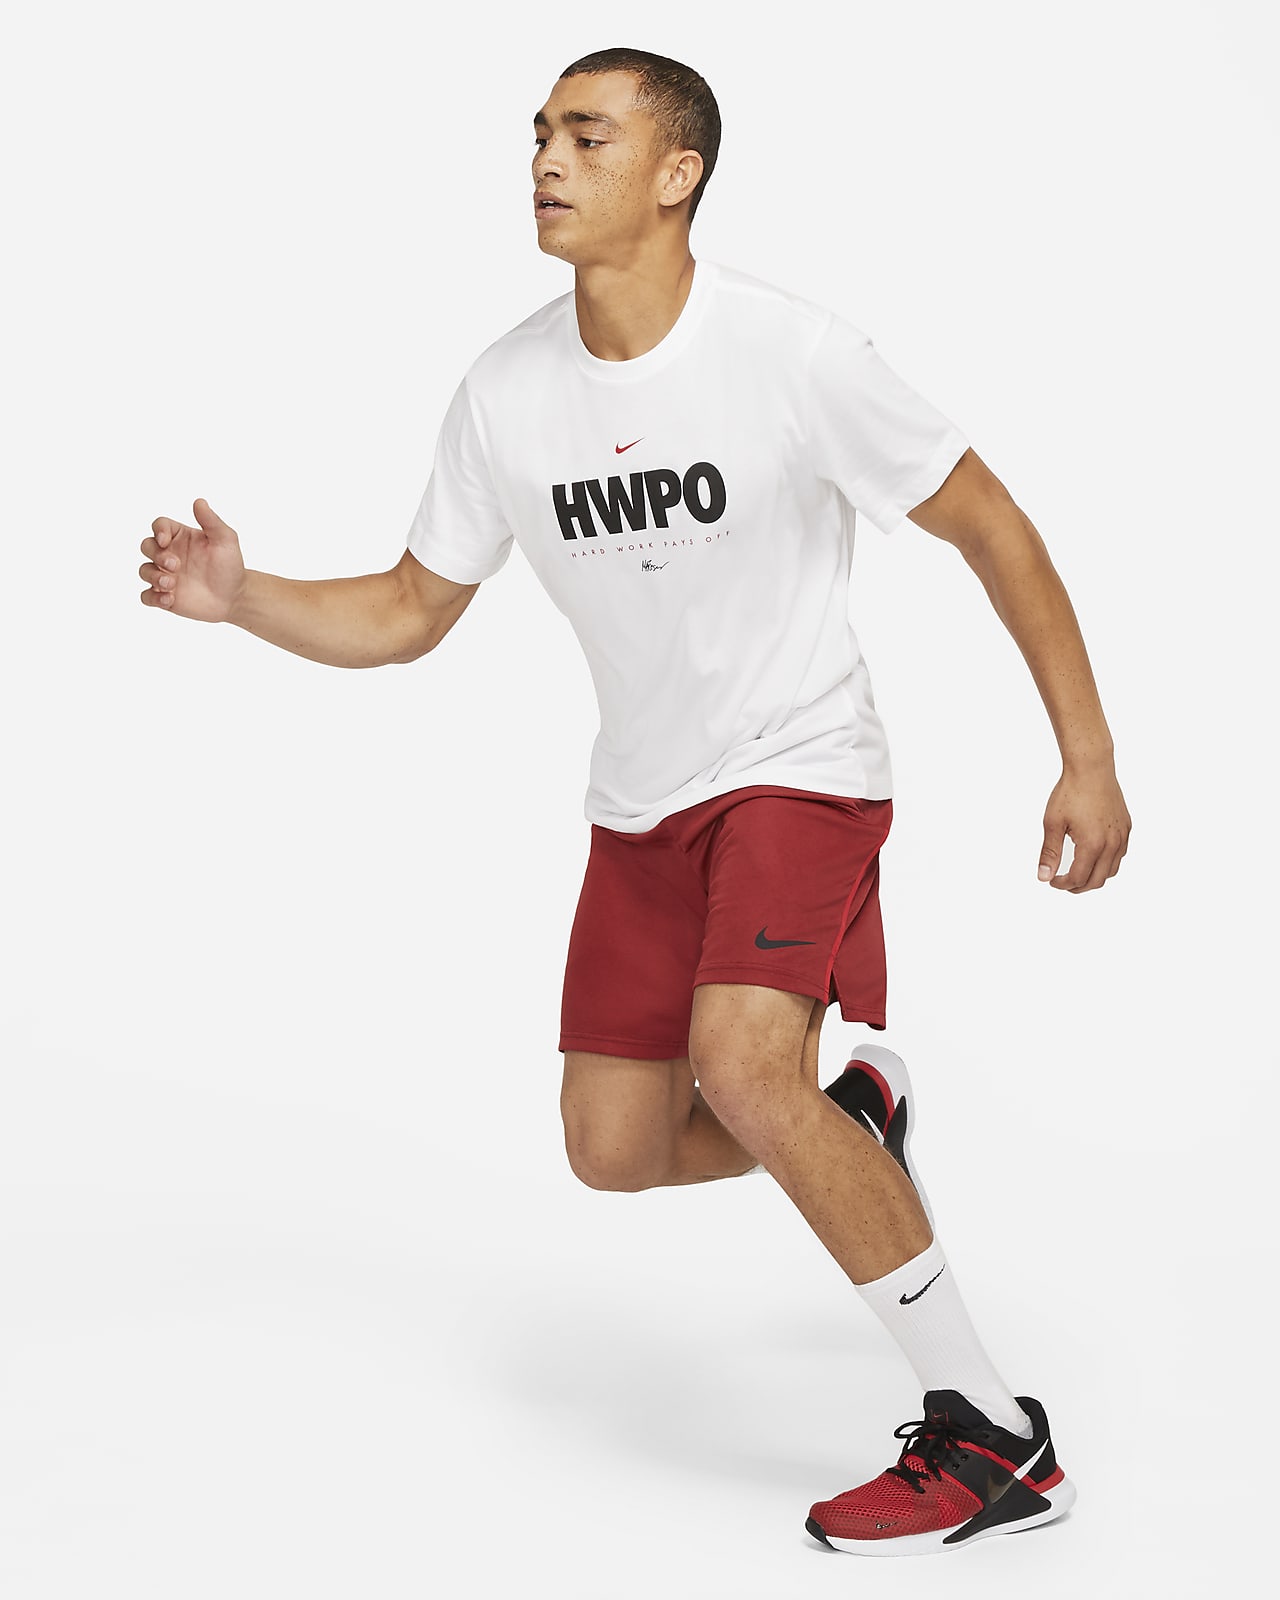 triathlete spille klaver Wetland Nike Dri-FIT 'HWPO' Men's Training T-Shirt. Nike LU